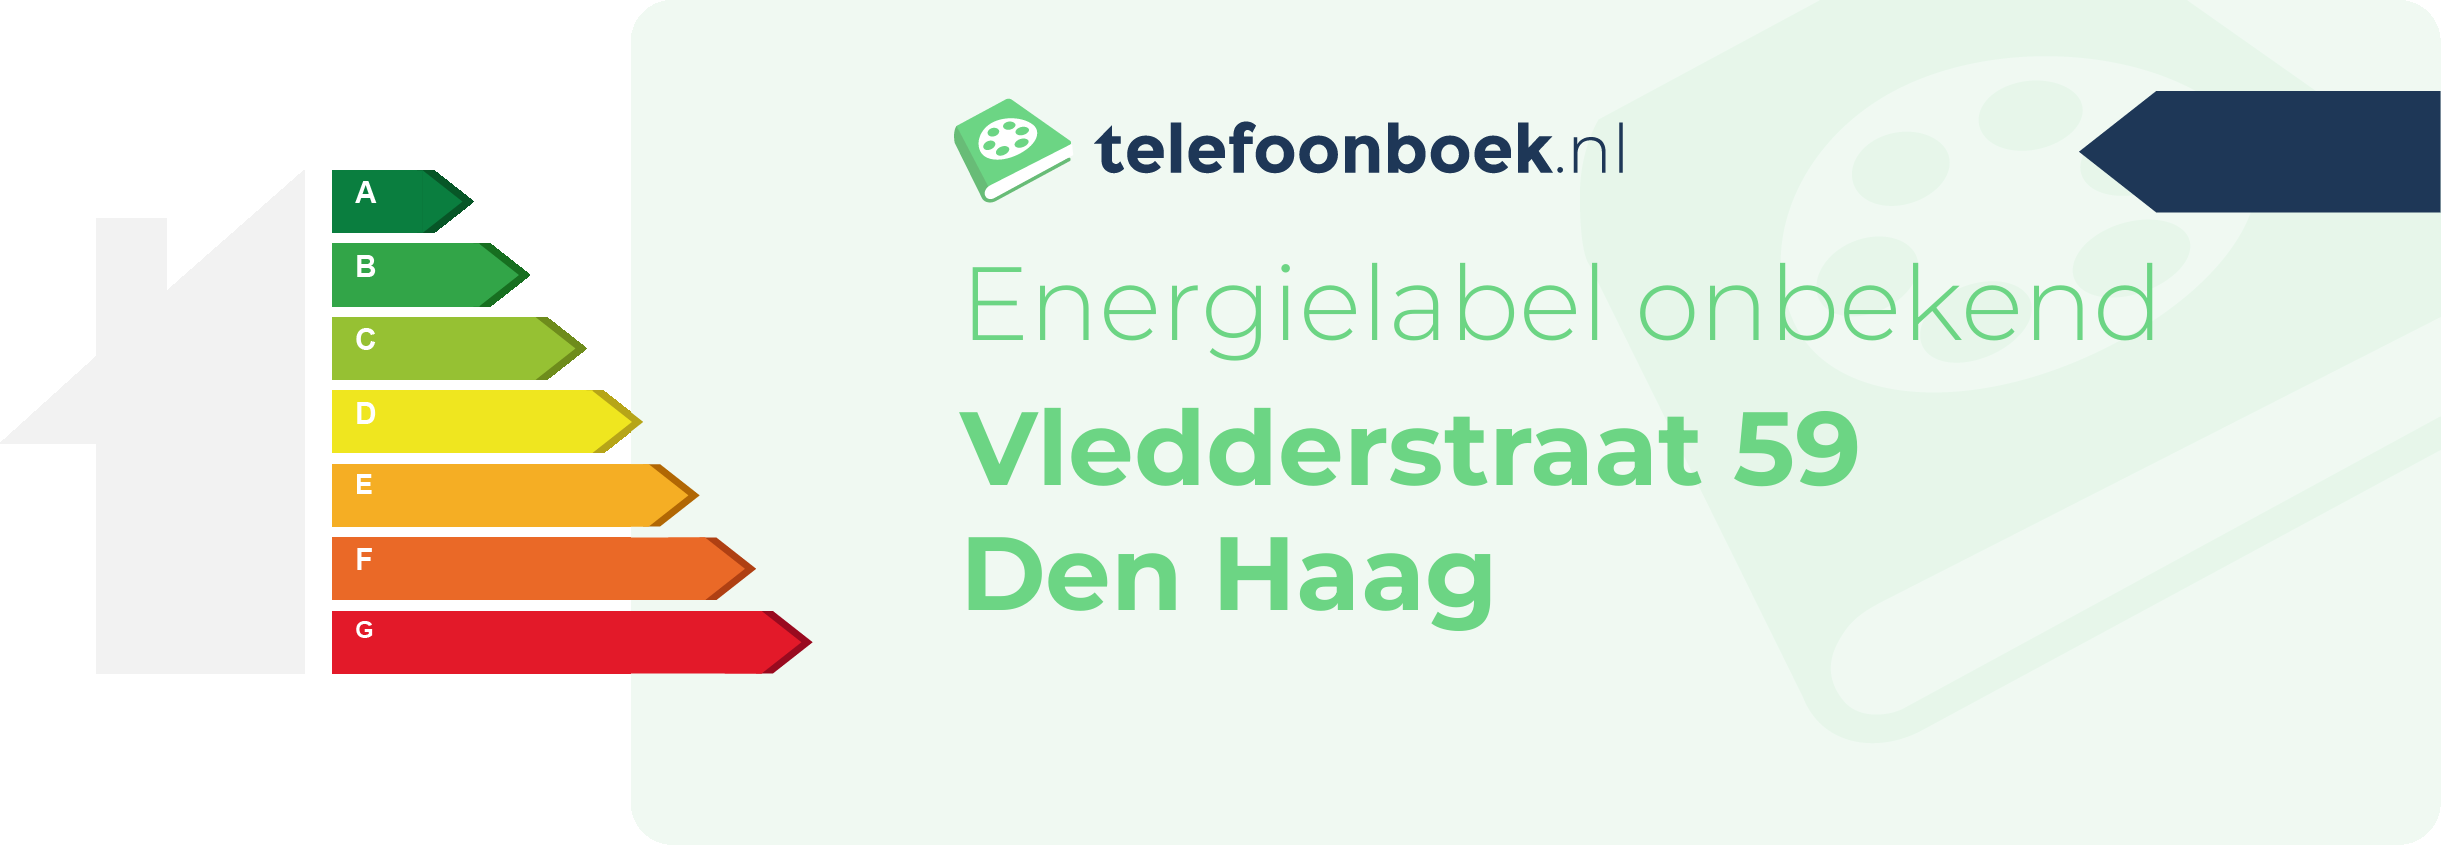 Energielabel Vledderstraat 59 Den Haag